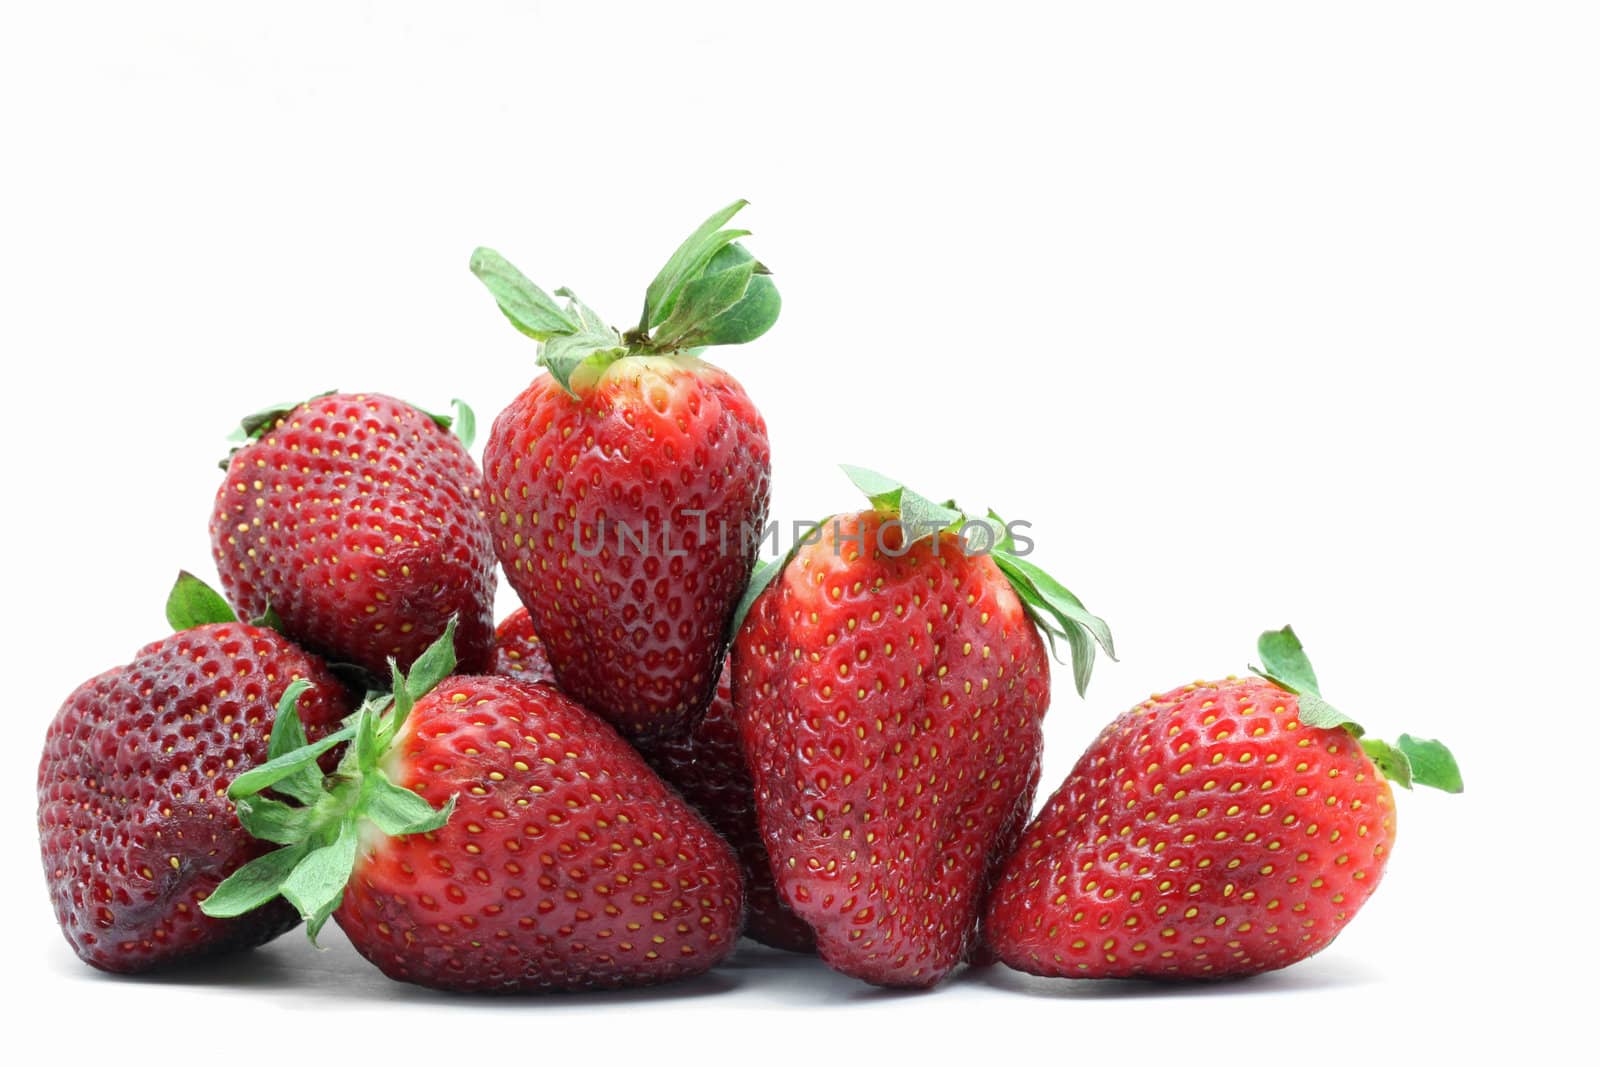 Strawberries by vichie81